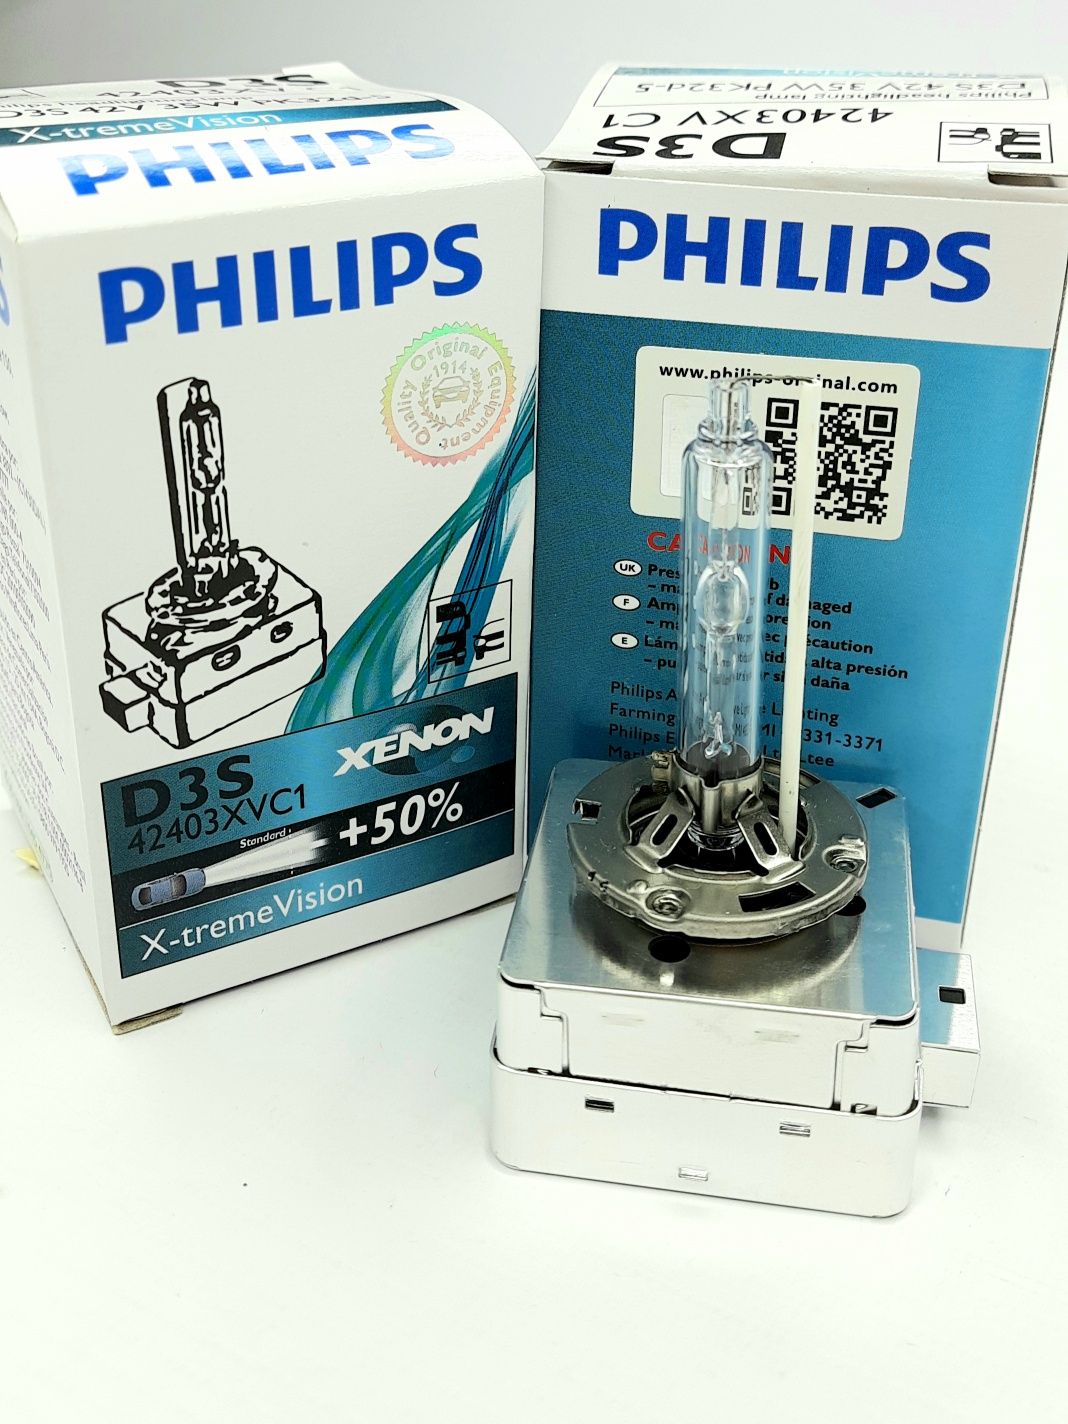 Philips D3S X-treme Vision+50% 42403XVC1